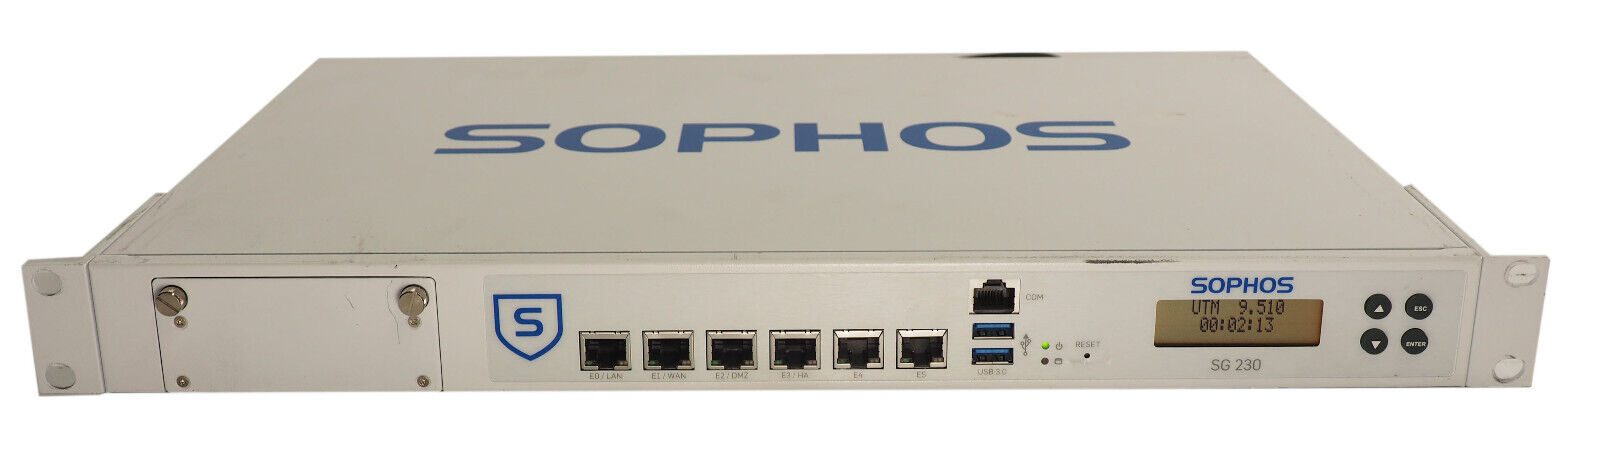 Sophos SG 230 Rev.1 Network Firewall Security Appliance